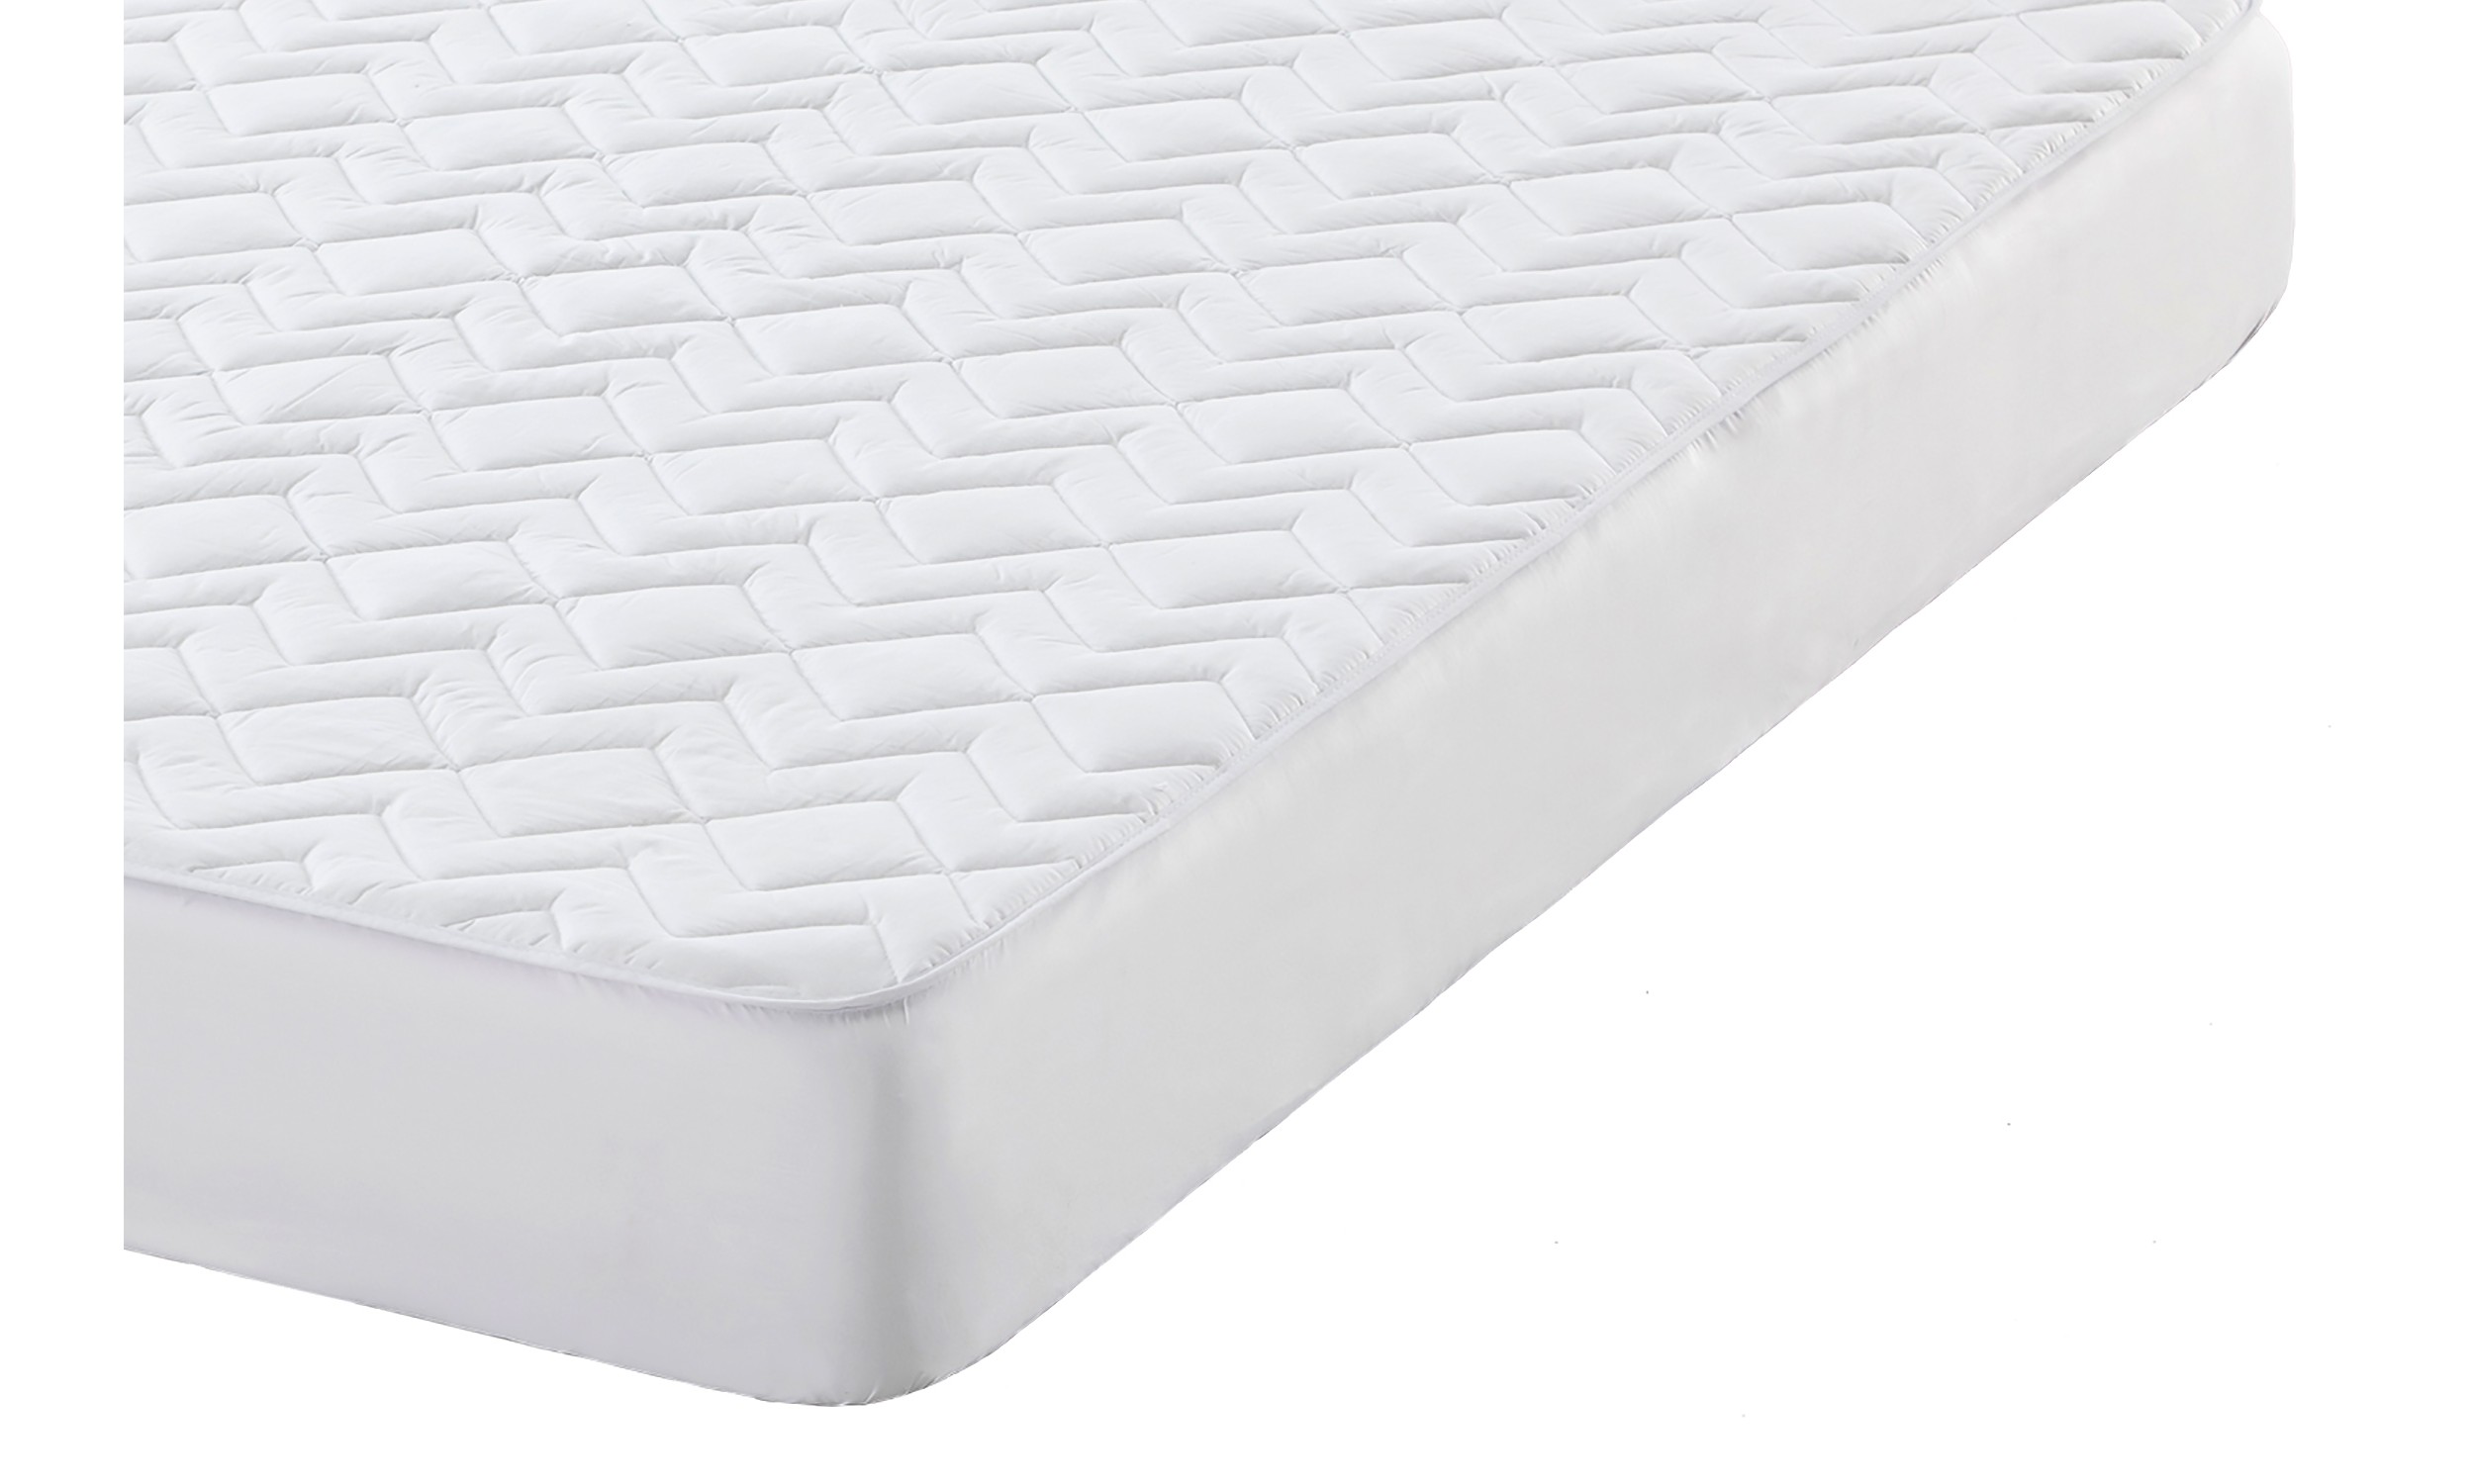 waterproof padded mattress cover